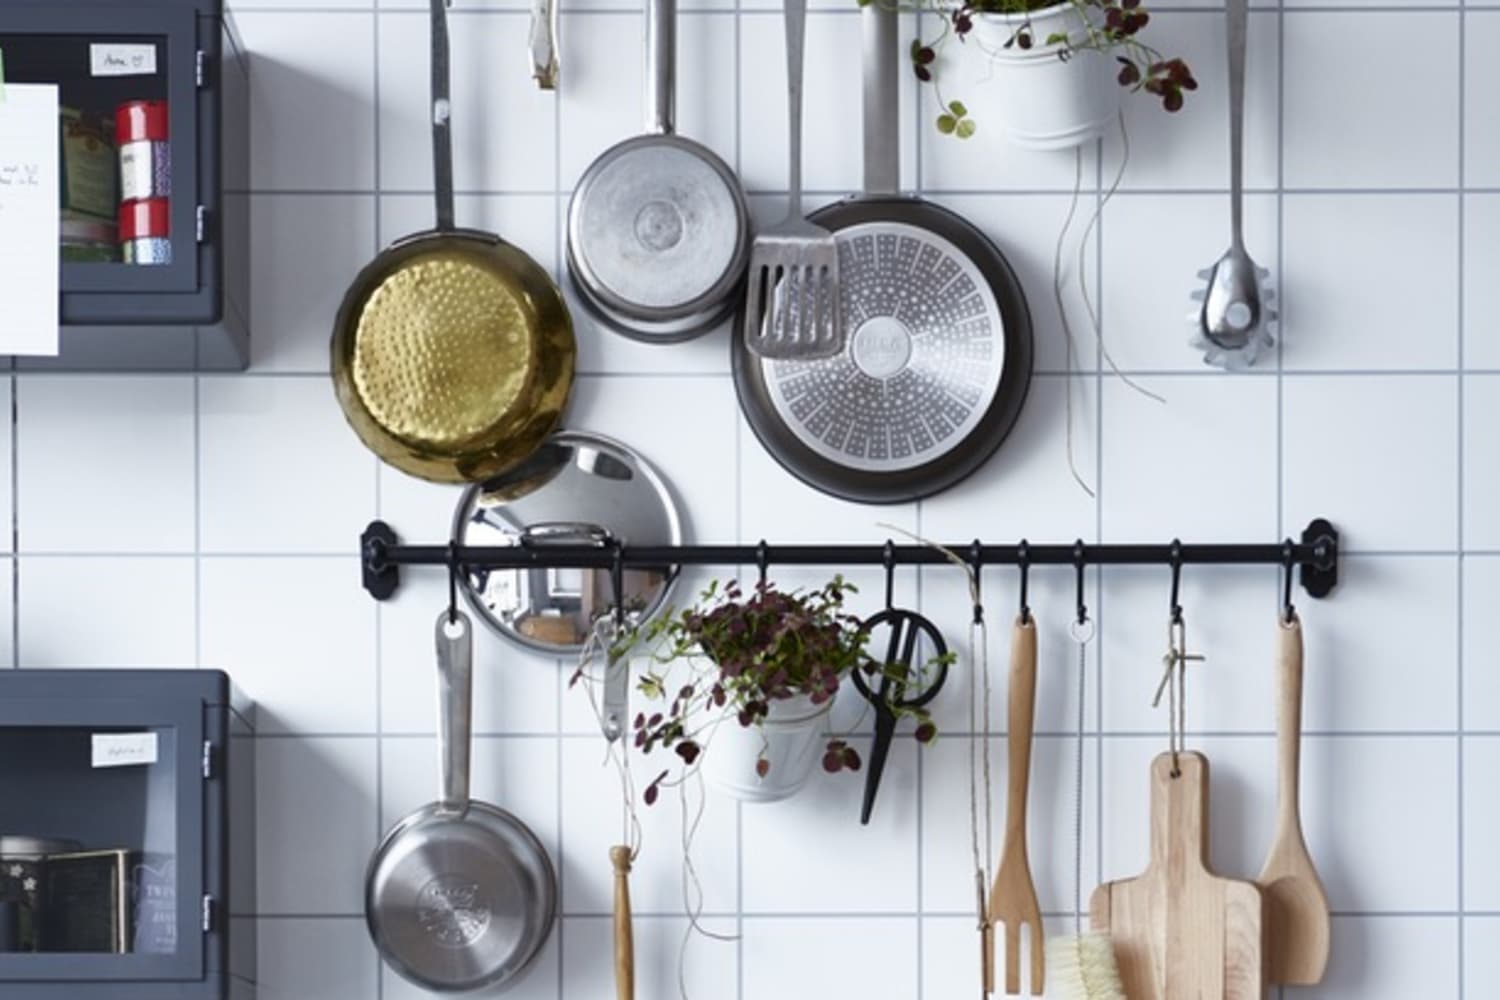 27 Smart Kitchen Wall Storage Ideas - Shelterness